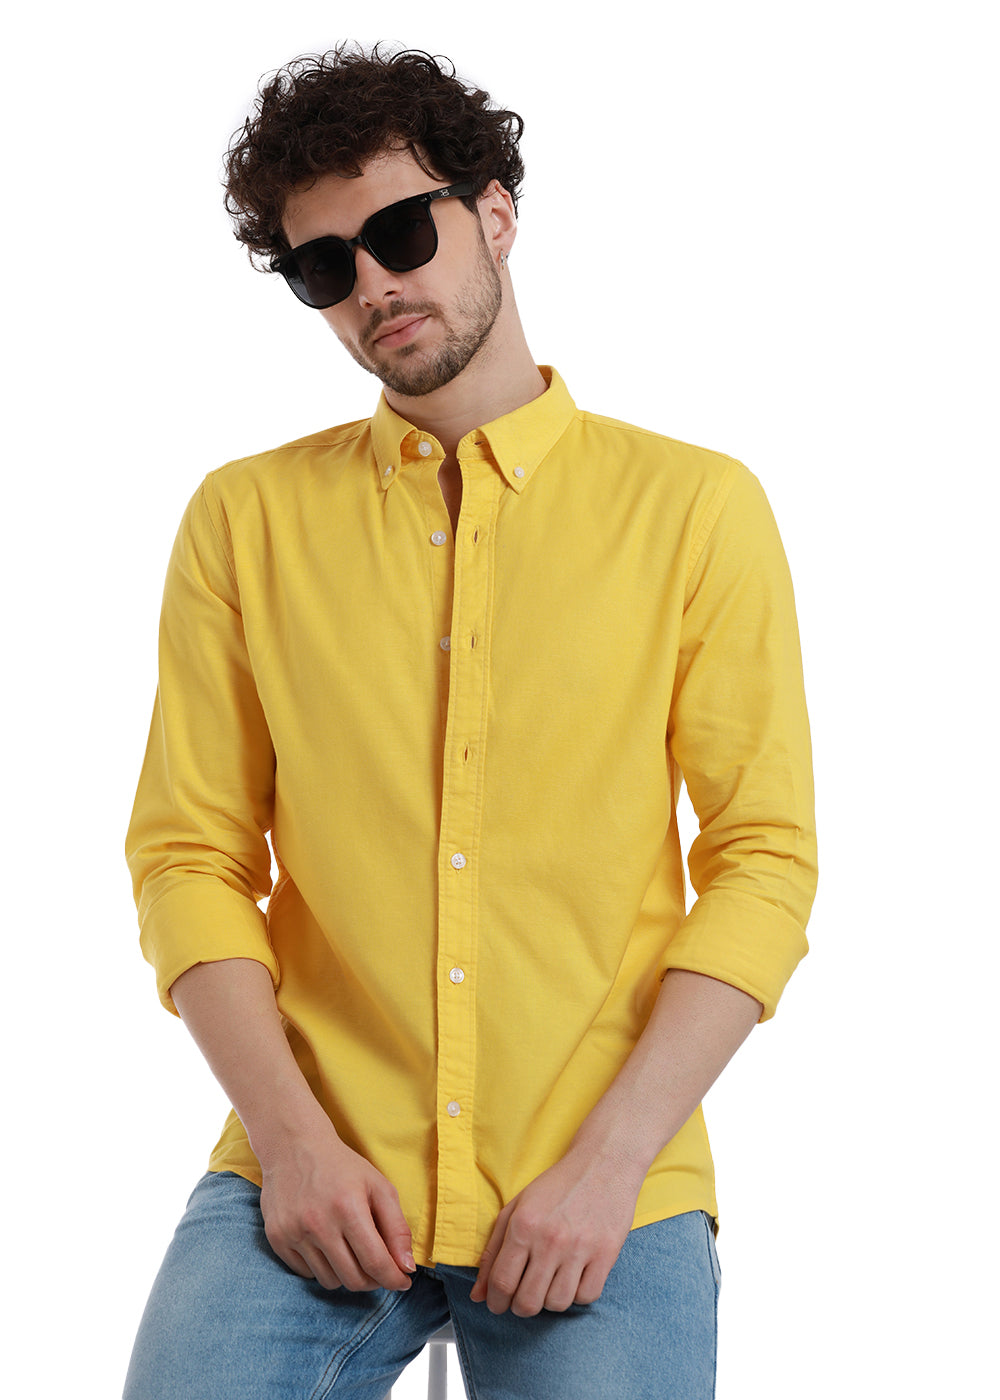 Vibrant Yellow Oxford Shir